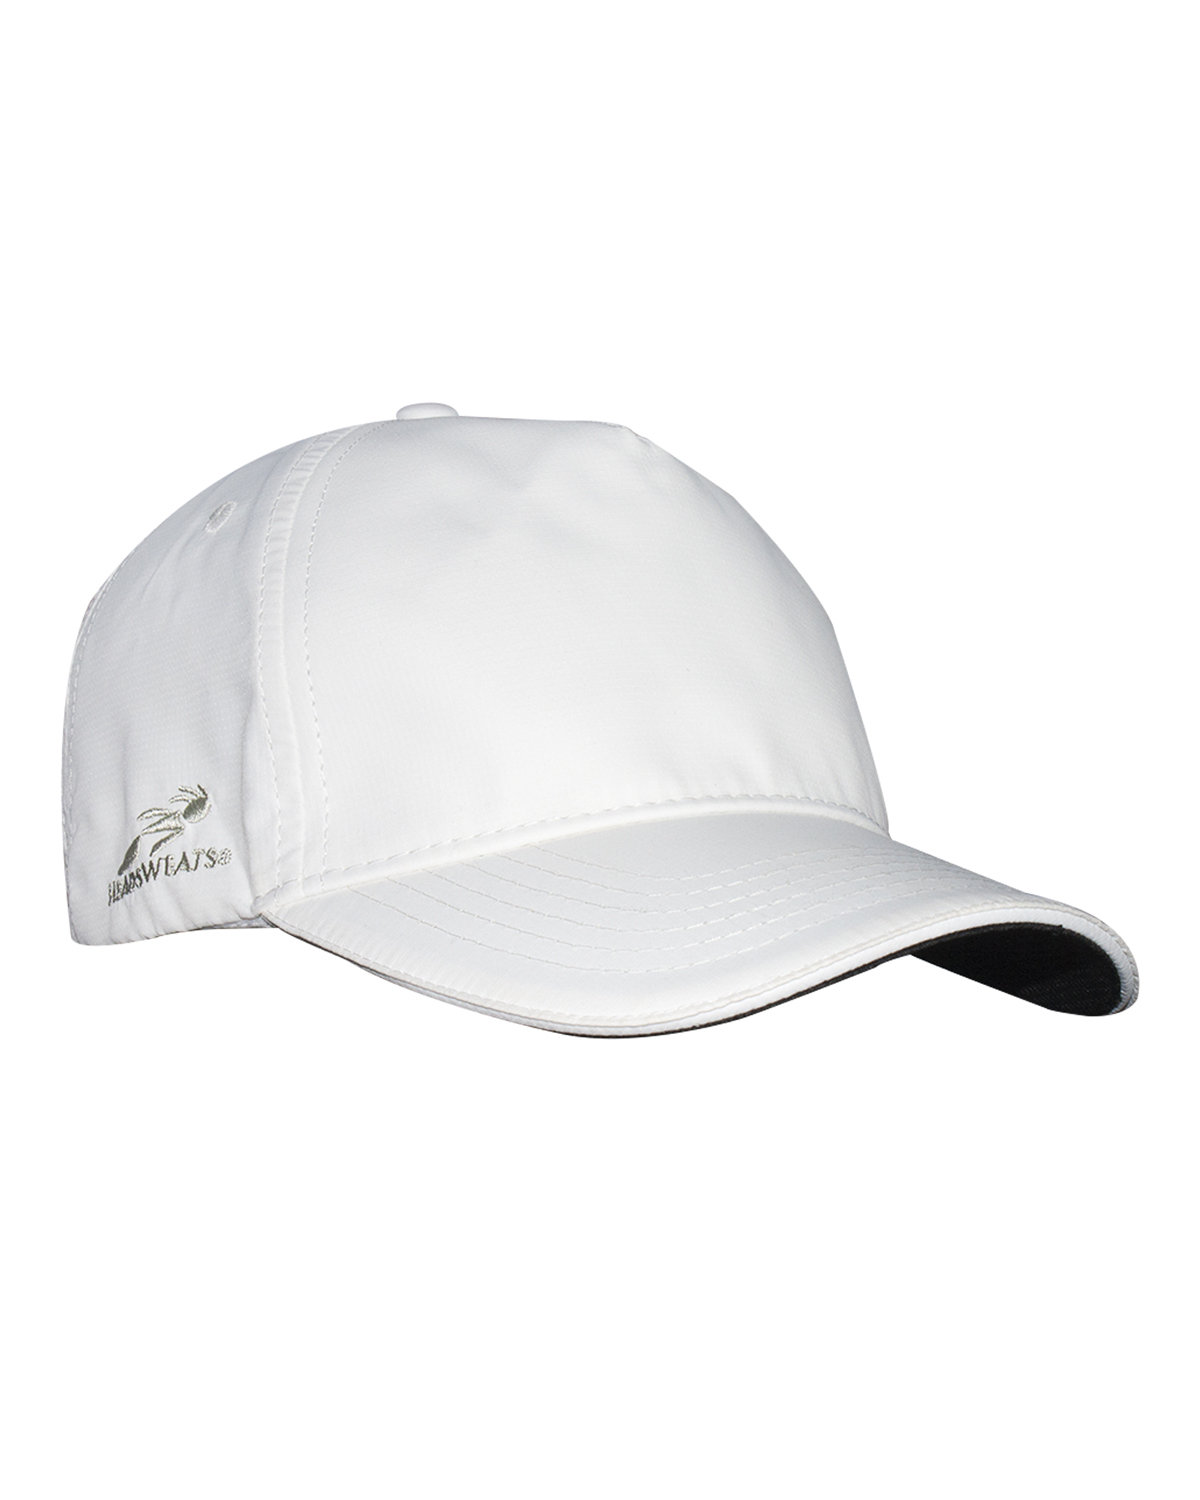 ApparelBus - Headsweats HDS7706 Unisex Woven 5-Panel Podium Hat